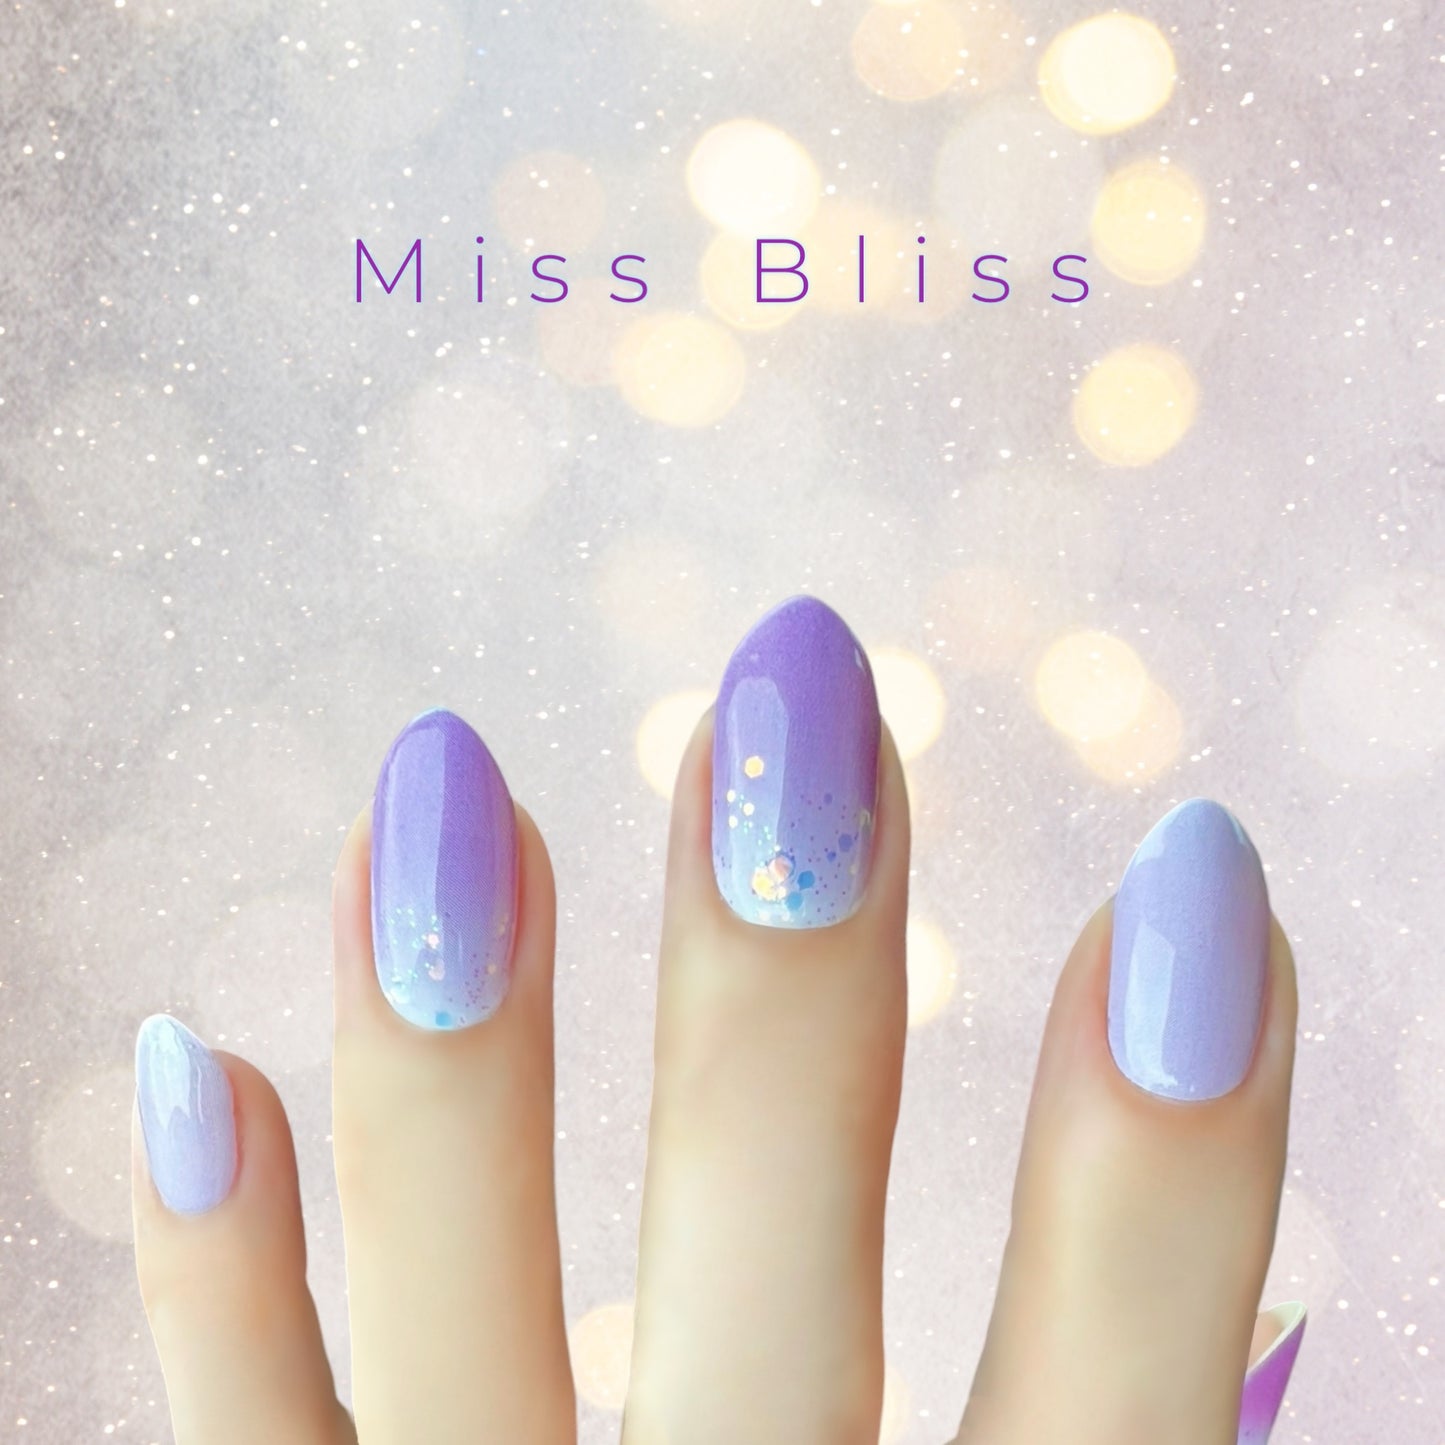 MISS BLISS